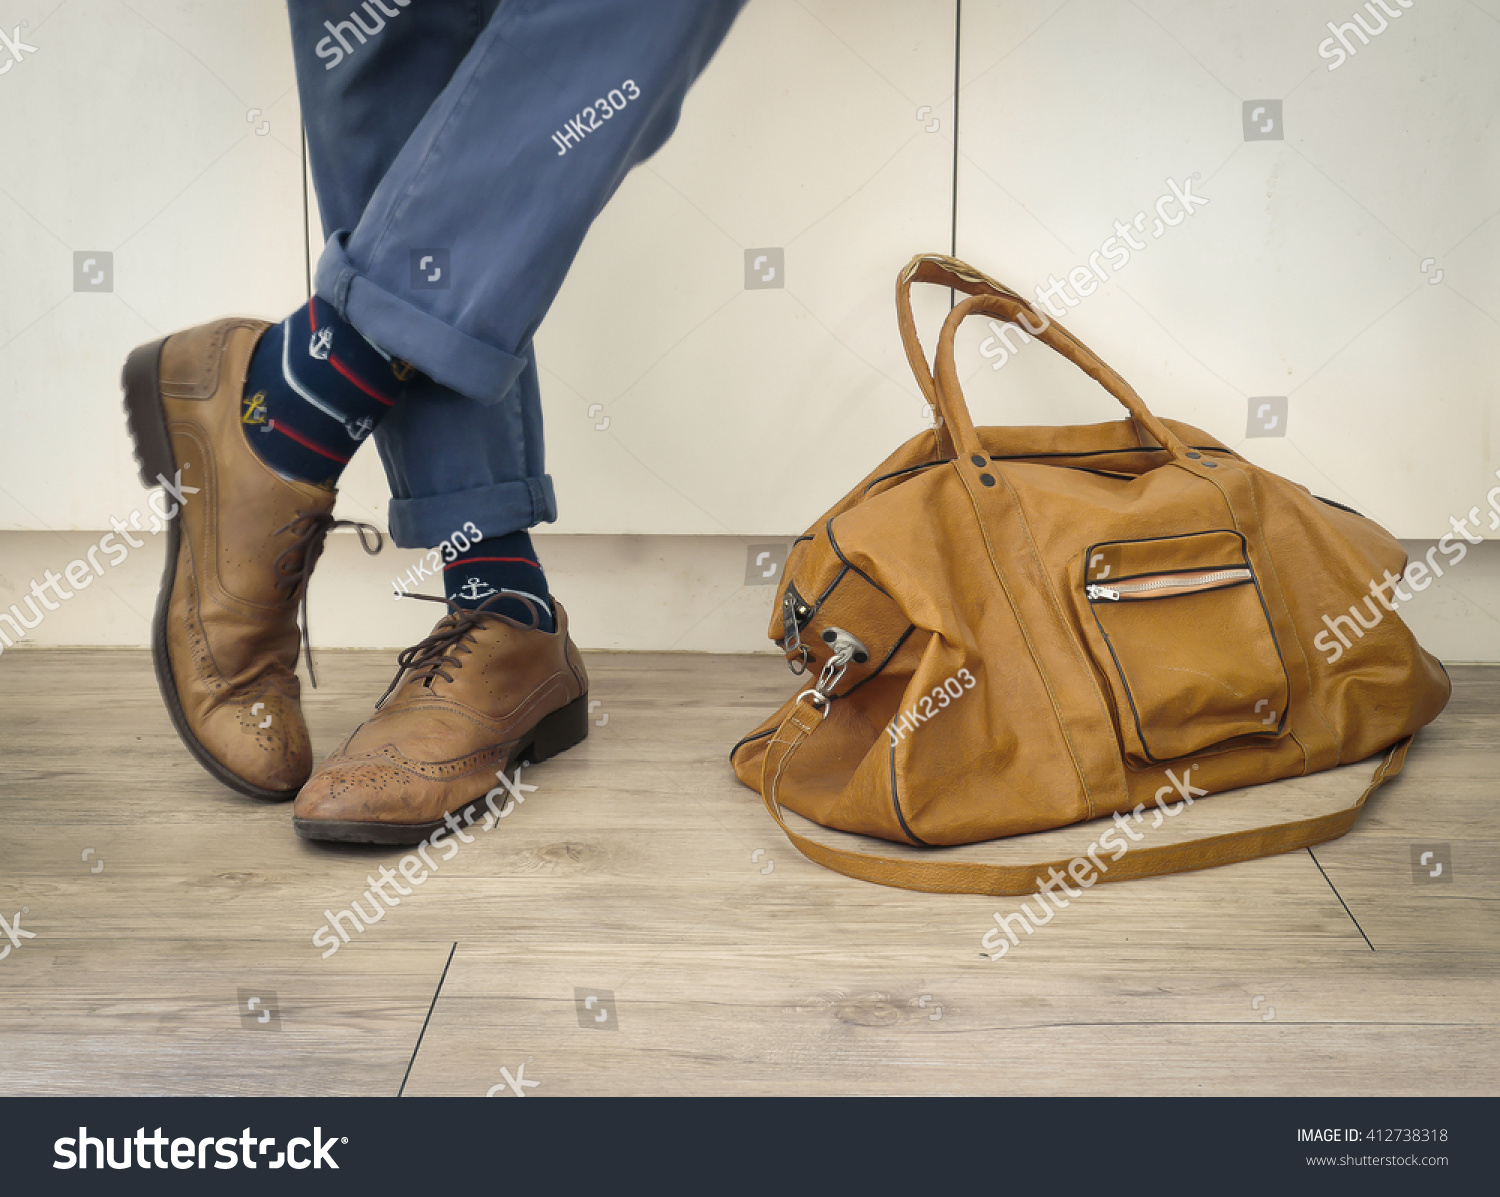 indigo shoes and bags